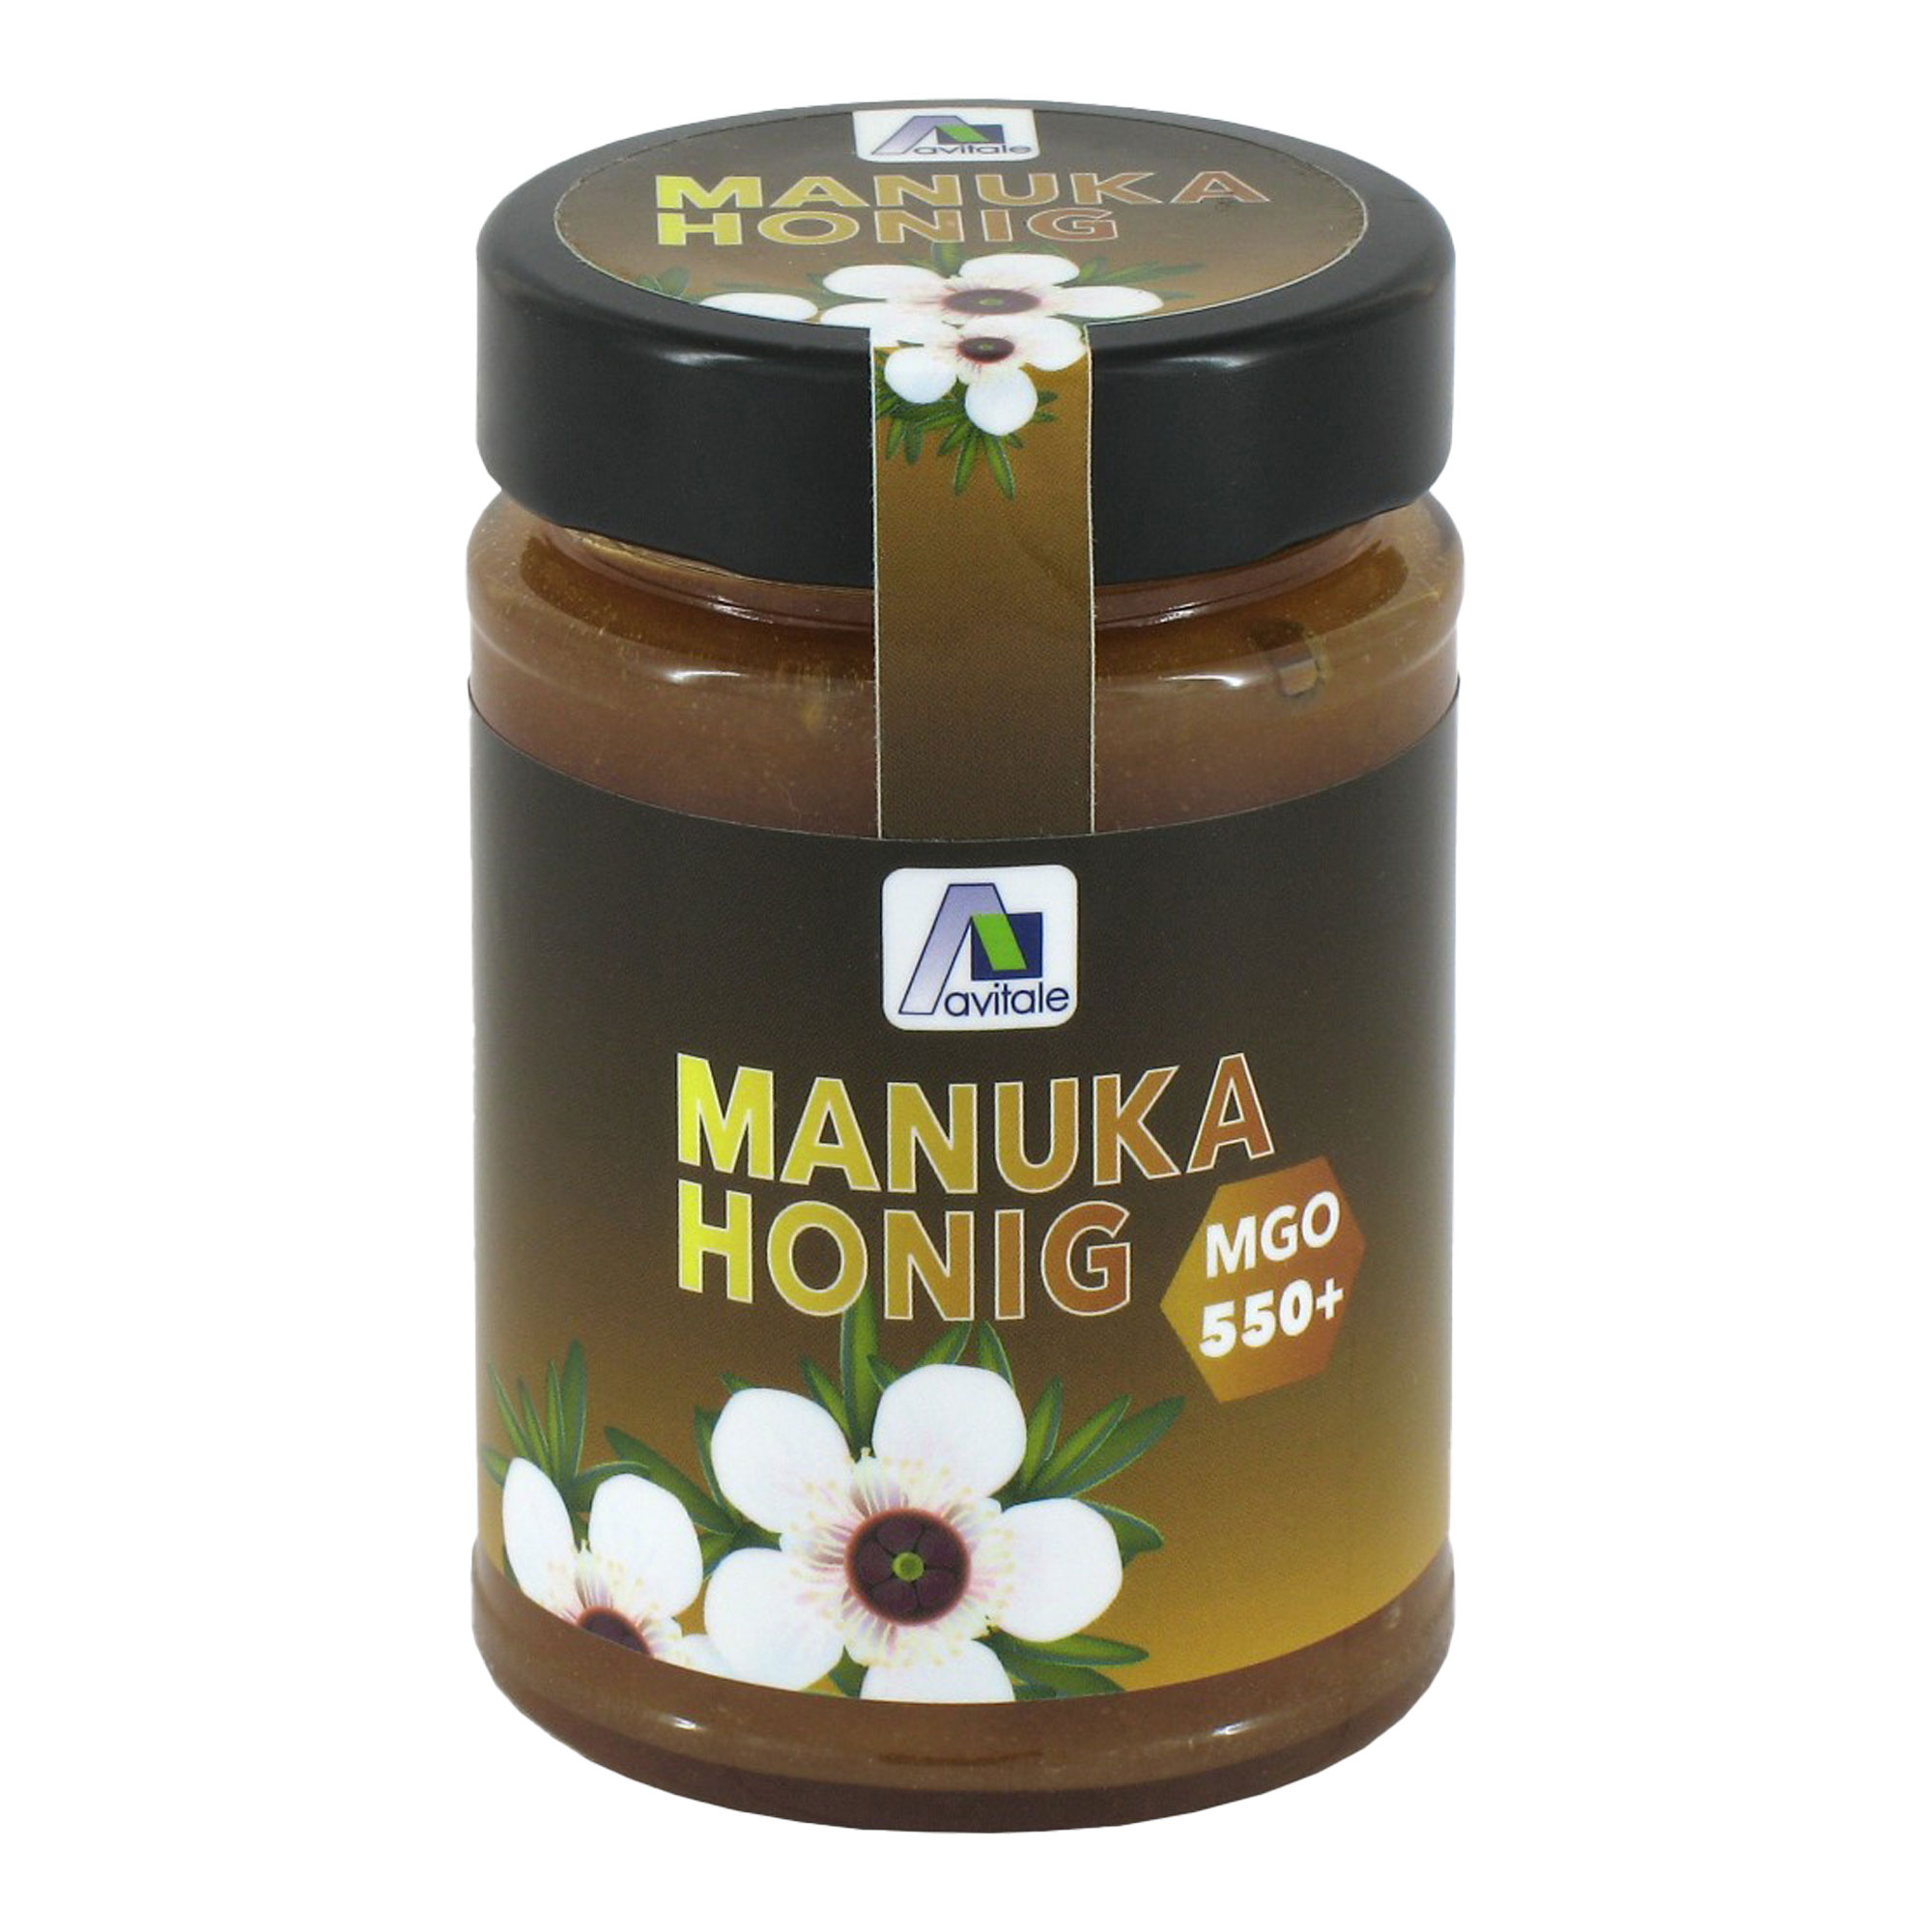 Honig aus Neuseeland mit mindestens 550 mg Methylglyoxal (MGO) pro Kilogramm Honig.